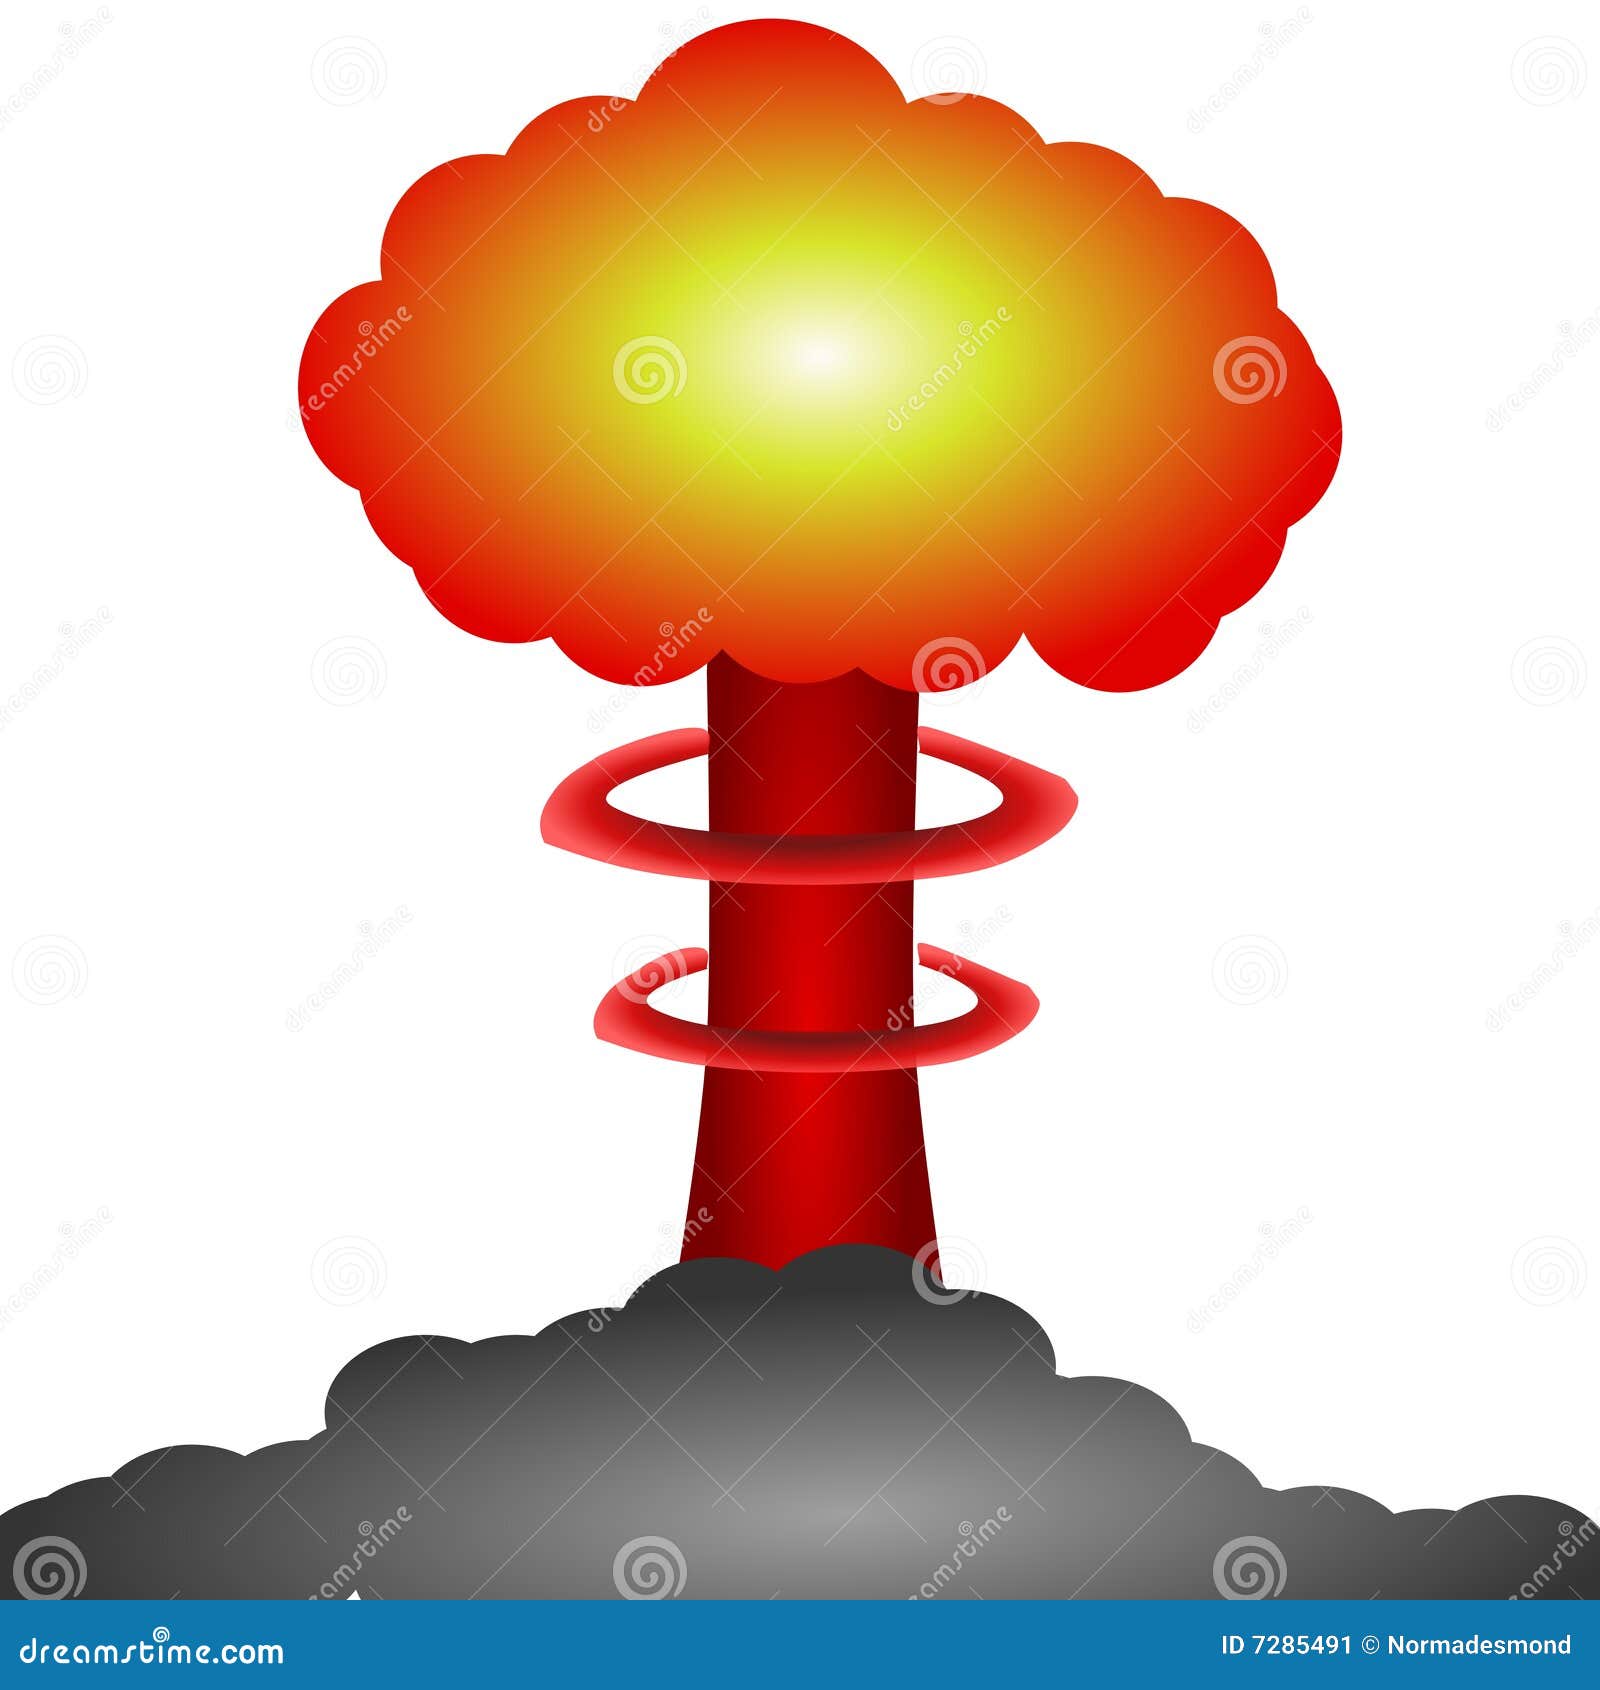 atom bomb clipart - photo #46